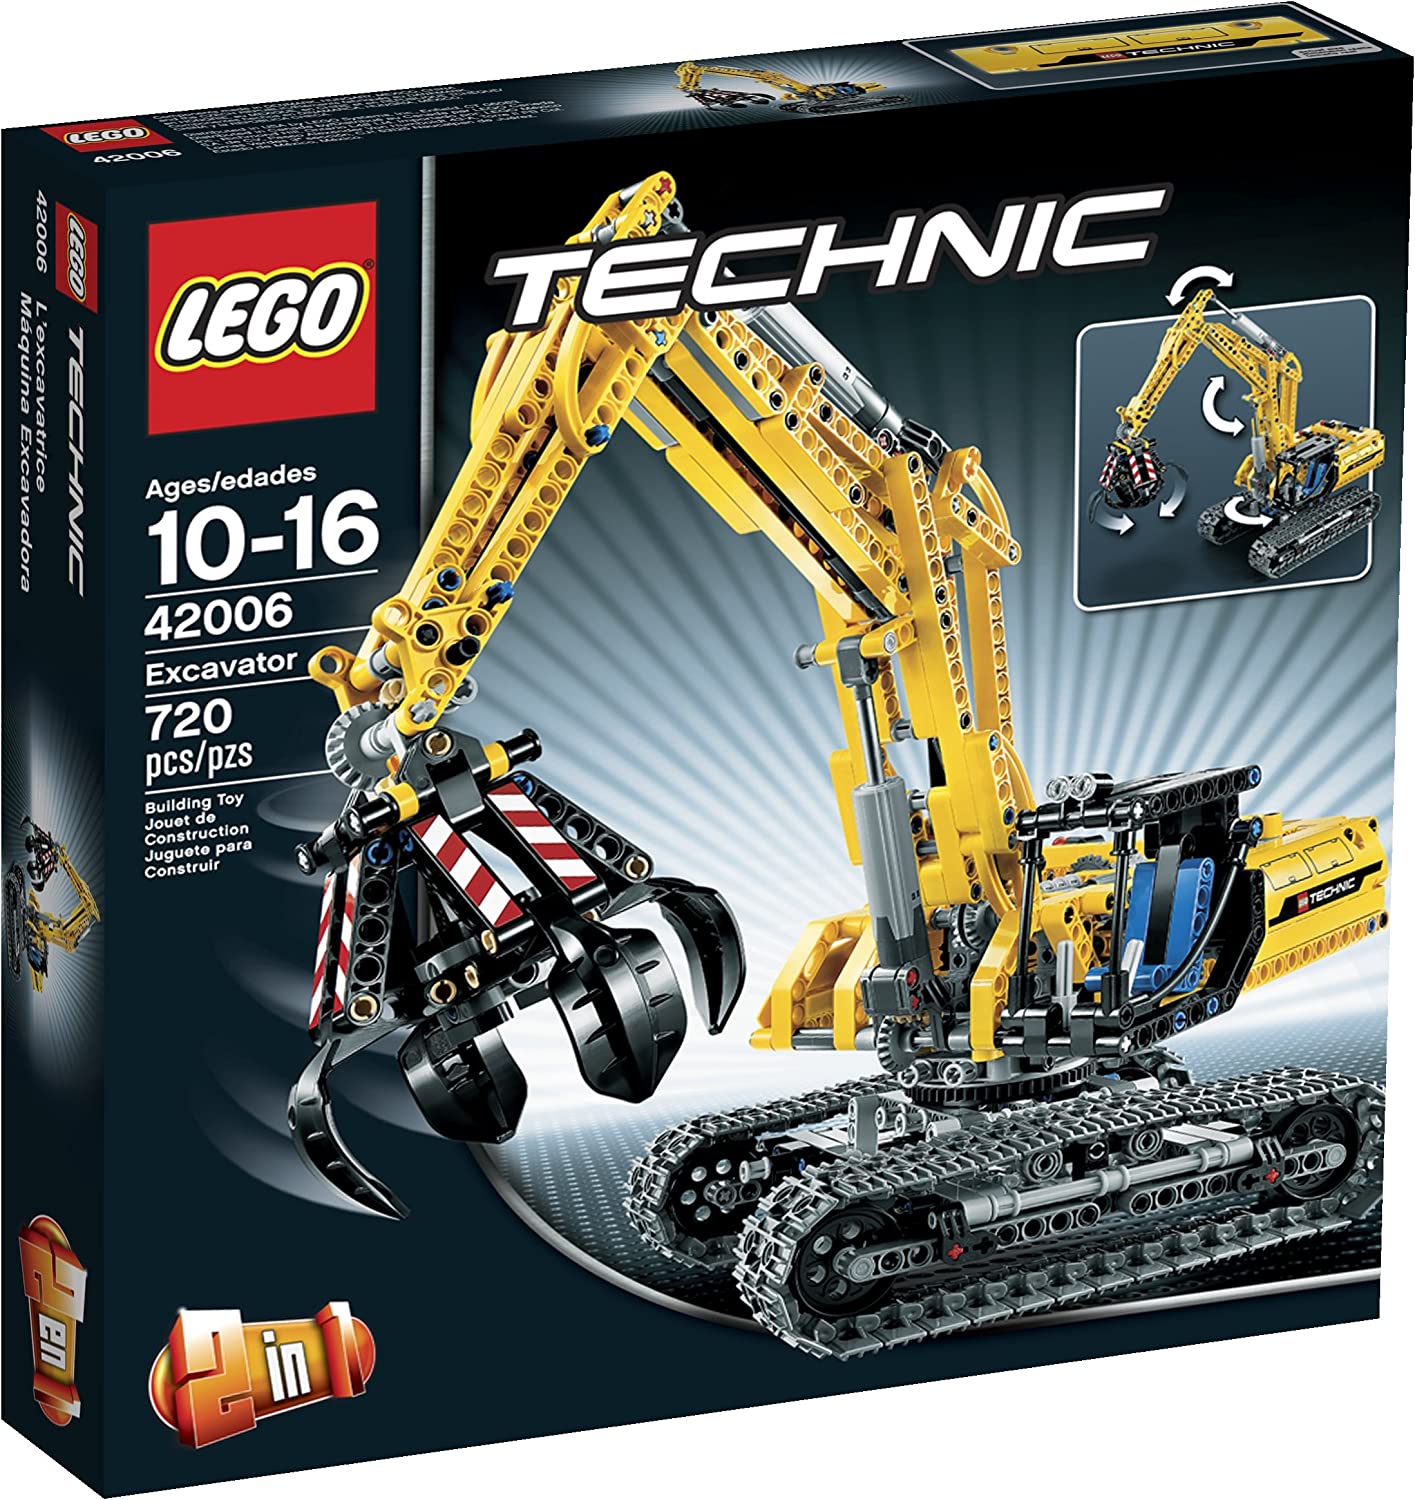 LEGO Technic 42006 Excavator - image 4 of 5